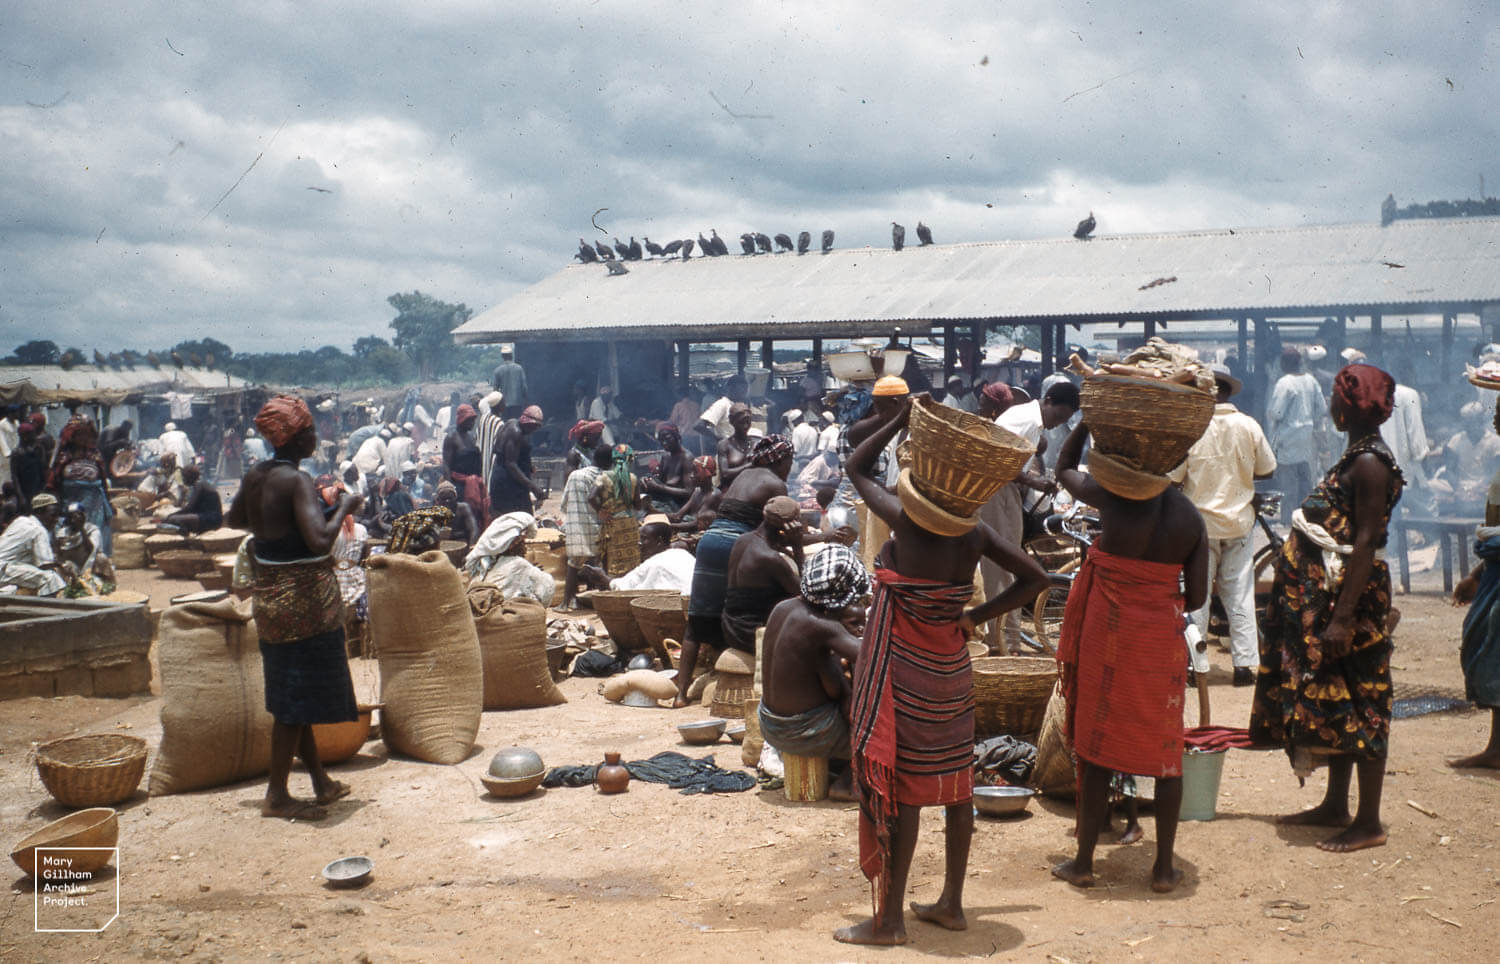 DeBruijneBisson-Market in Kaduna, Nigeria in 2017-Dr Mary Gillham Archive Project-Flickr